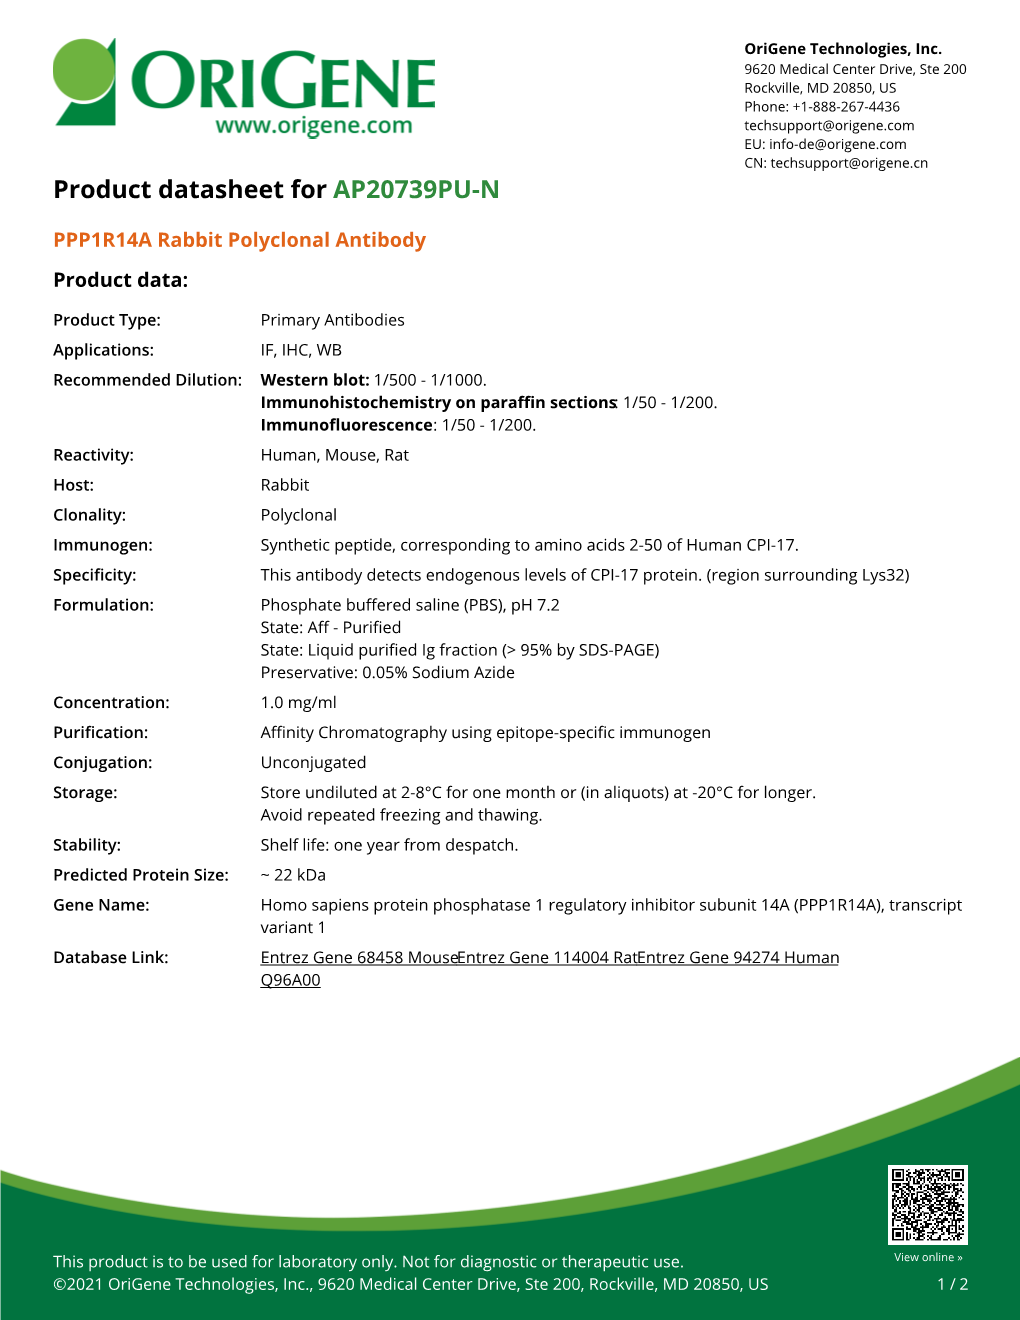 PPP1R14A Rabbit Polyclonal Antibody – AP20739PU-N | Origene